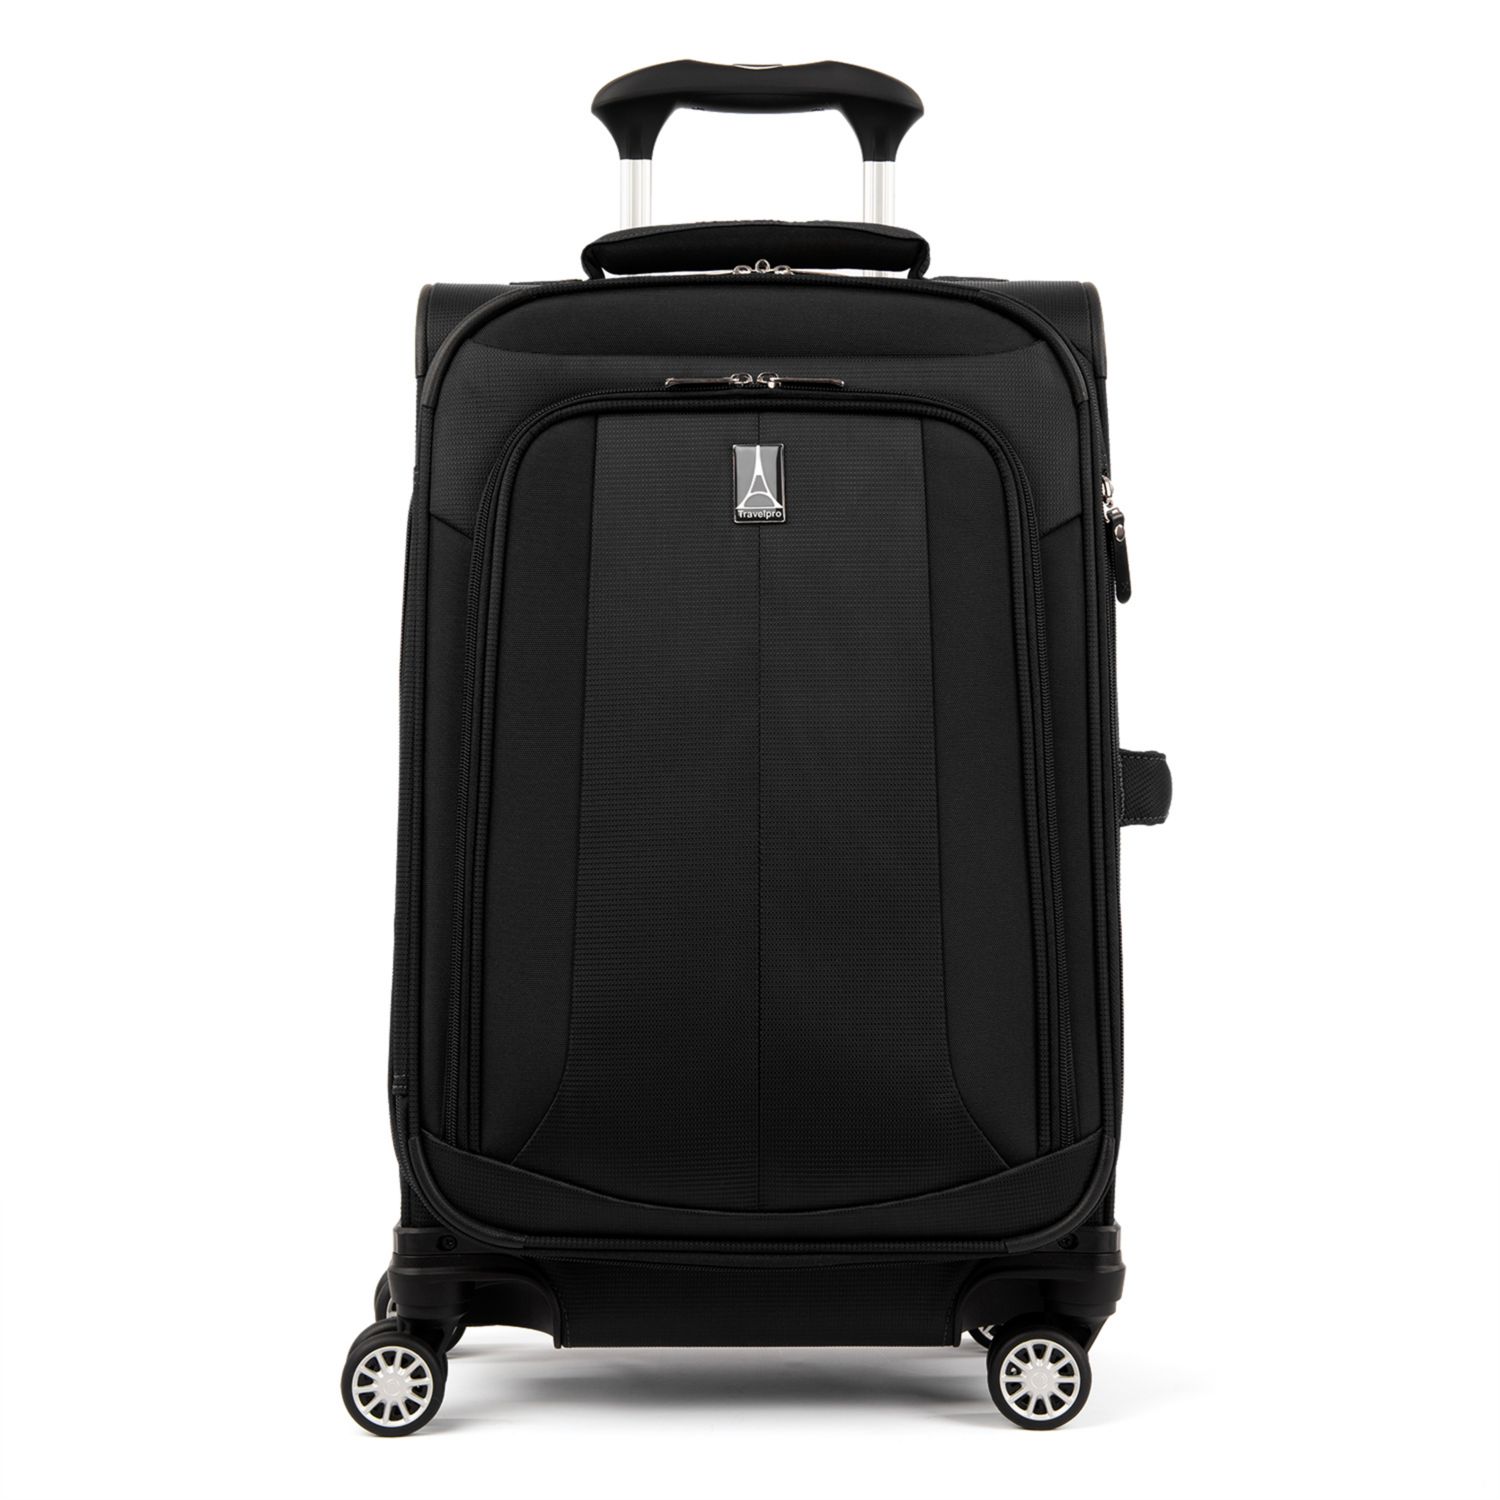 Travelpro Luggage Sets Online, 58% OFF | www.pegasusaerogroup.com